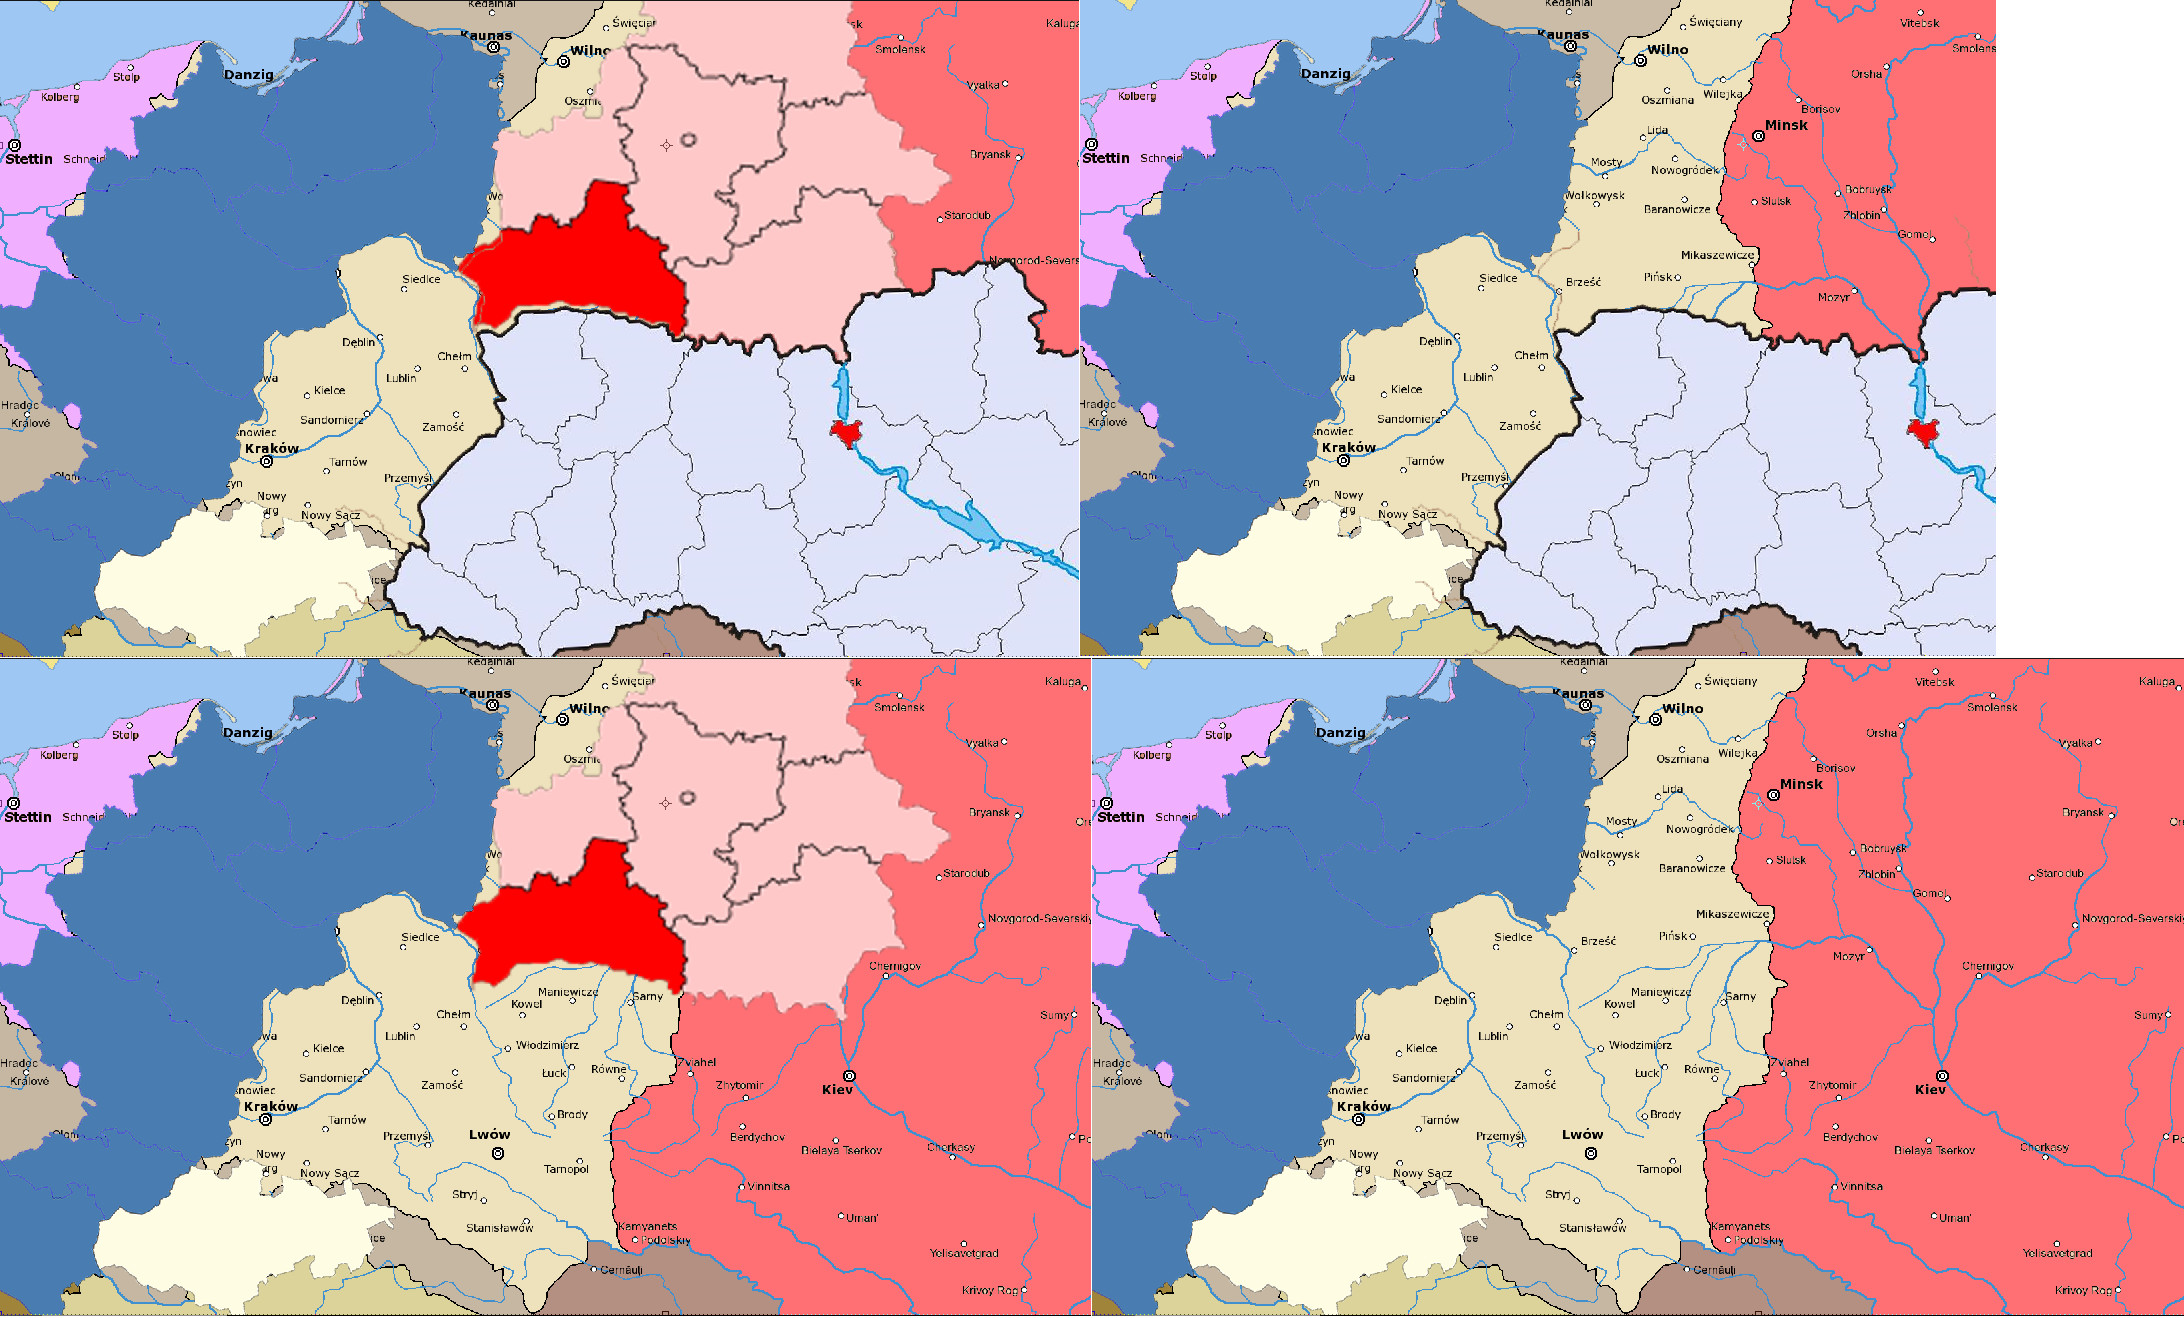 Poland_Area_Comparison_by_JJohnson1701.jpg